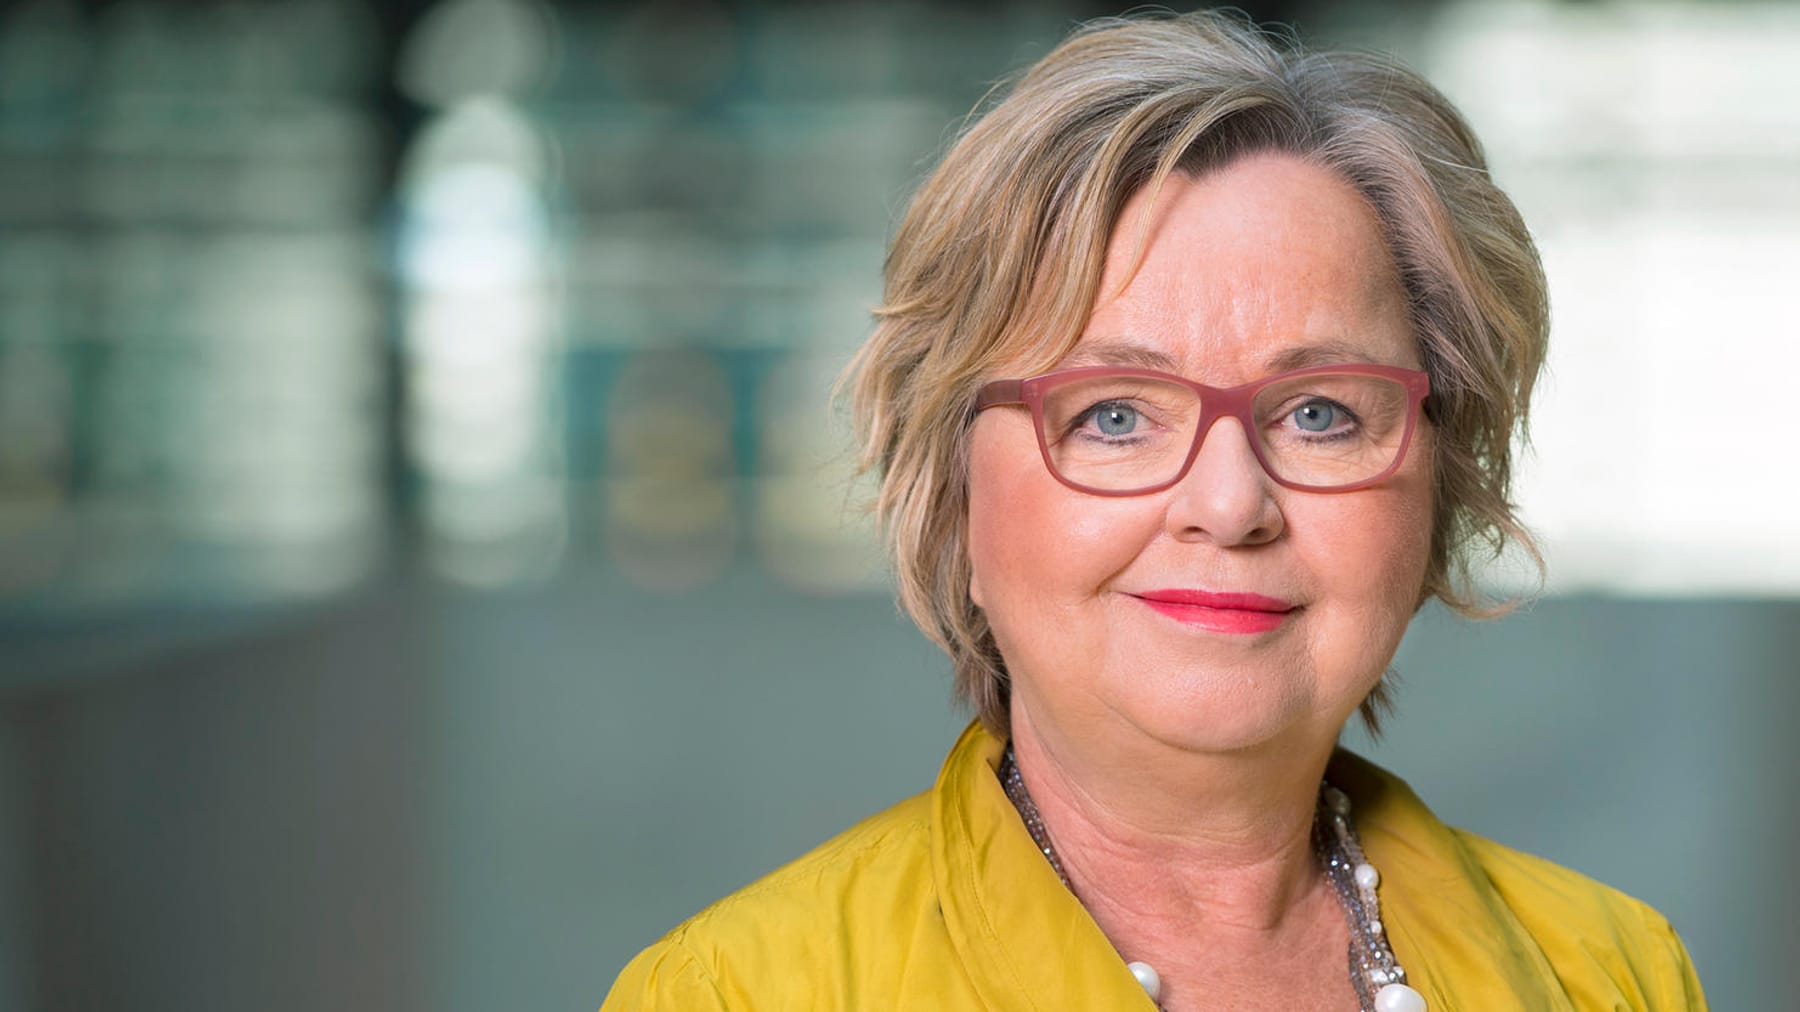 Wartawan ARD Hanni Hüsch berhenti sejenak – “Kami akan merindukanmu”